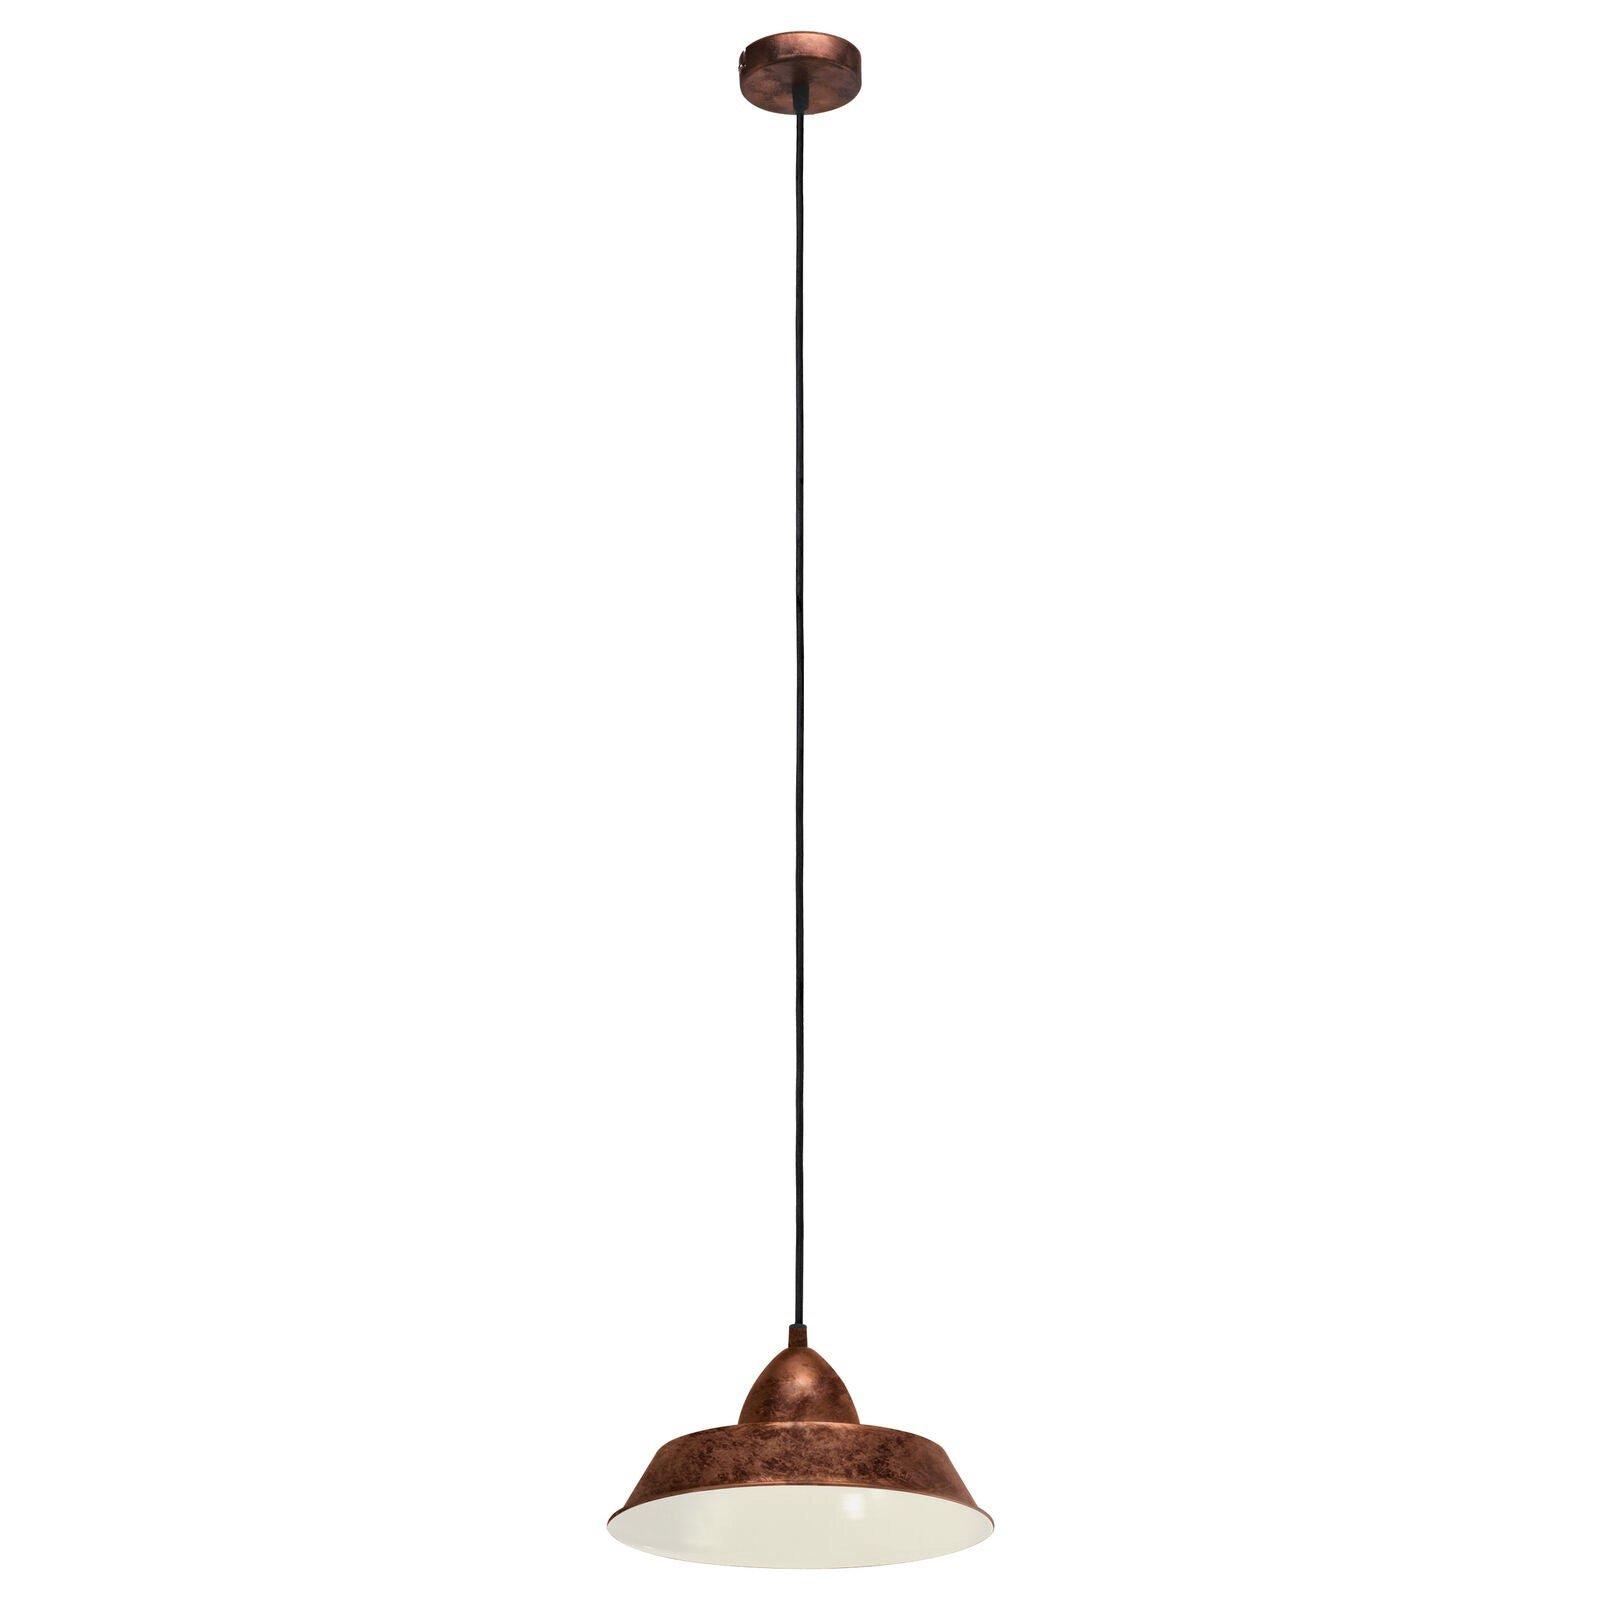 Hanging Ceiling Pendant Light Antique Copper Shade 1 x 60W E27 Bulb Lamp